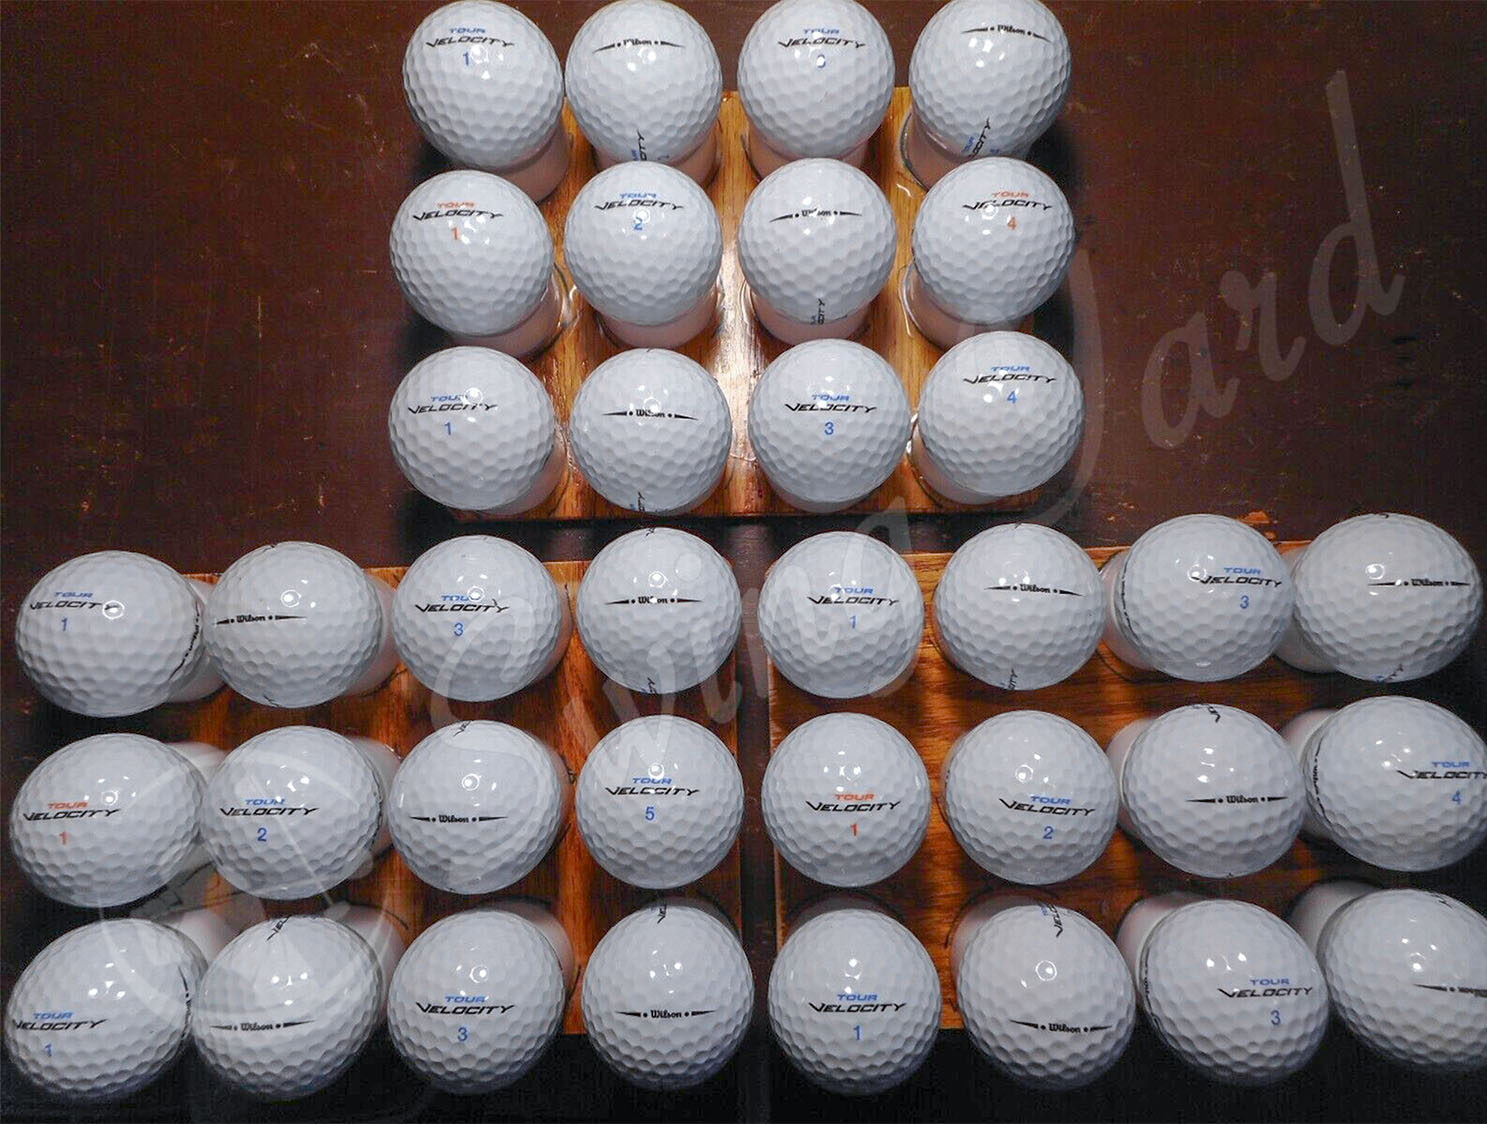 The Wilson Tour Velocity balls on the floor